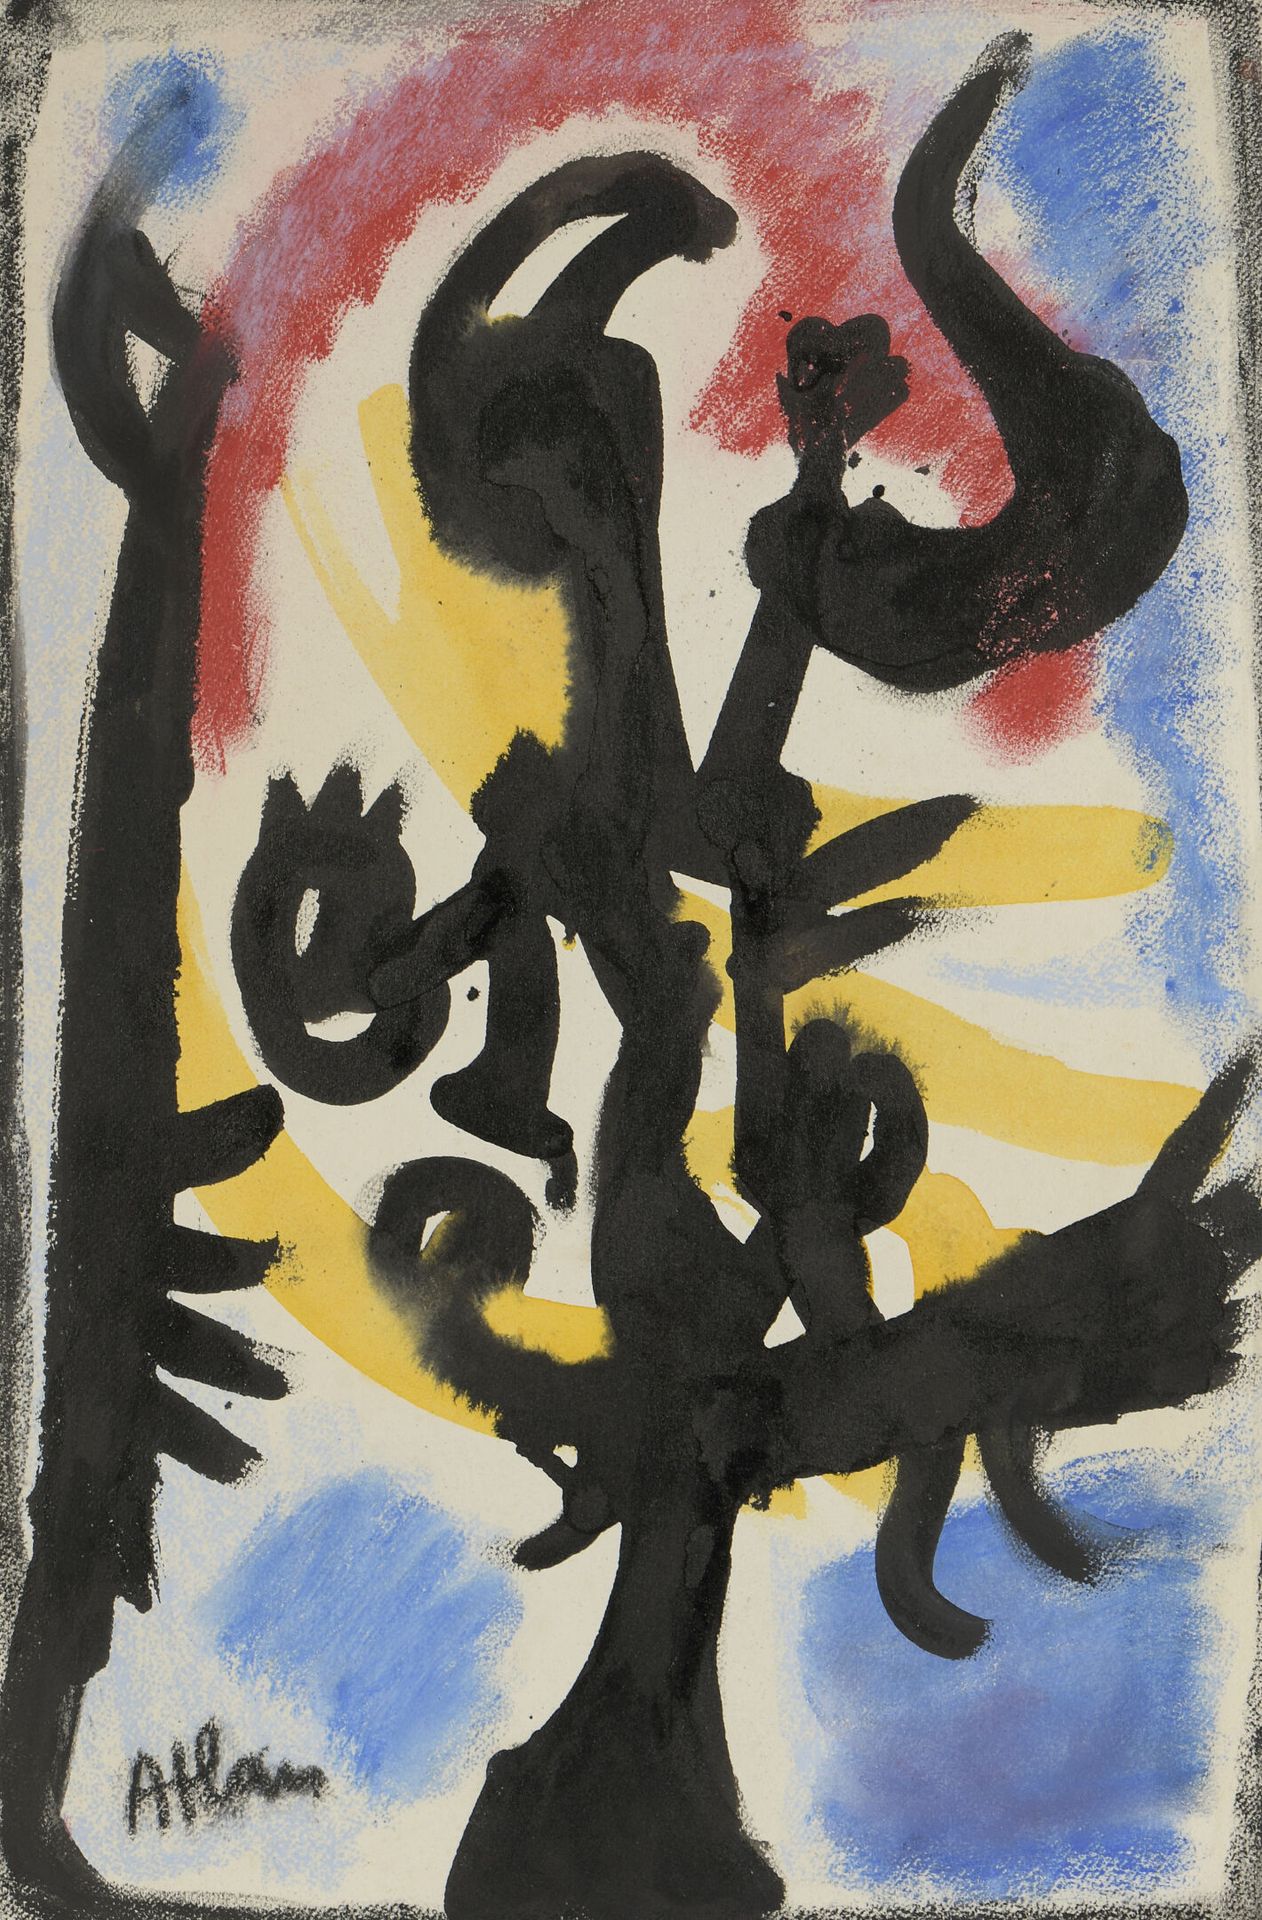 Null 让-米歇尔-阿特兰(1913-1960)

无题》，1955年

粉彩、水彩和墨水，左下方有签名

H.45 cm - W. 29.7 cm D.V.&hellip;